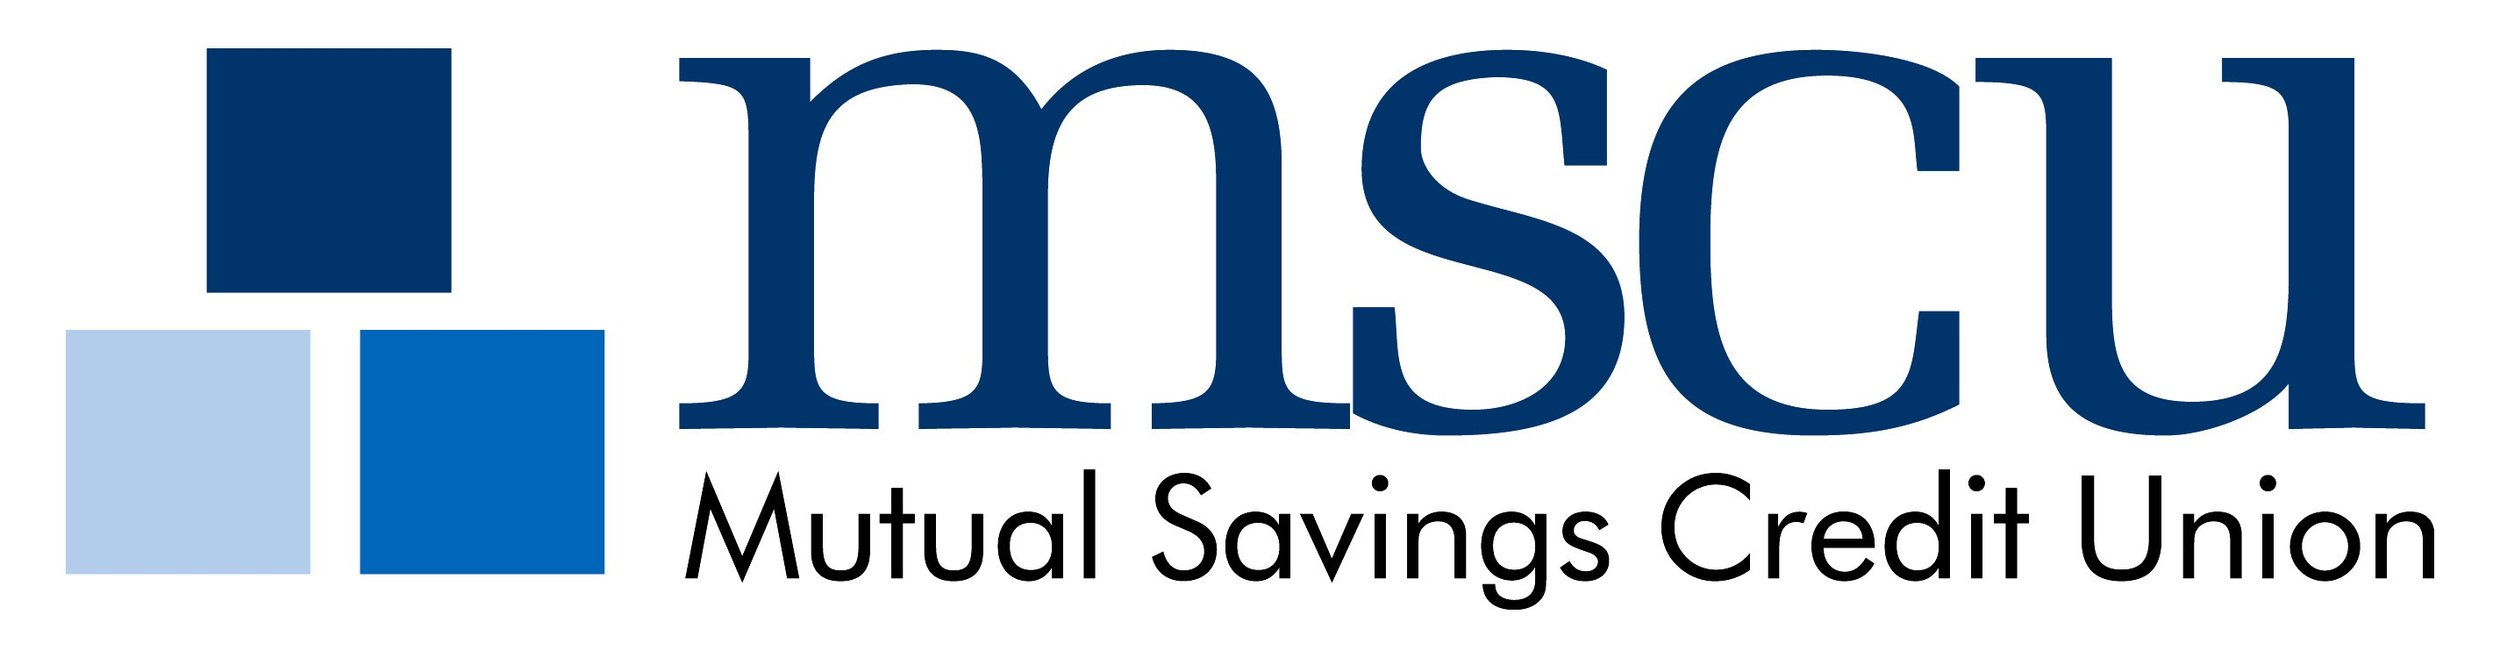 Mutual Savings Credit Union.jpg